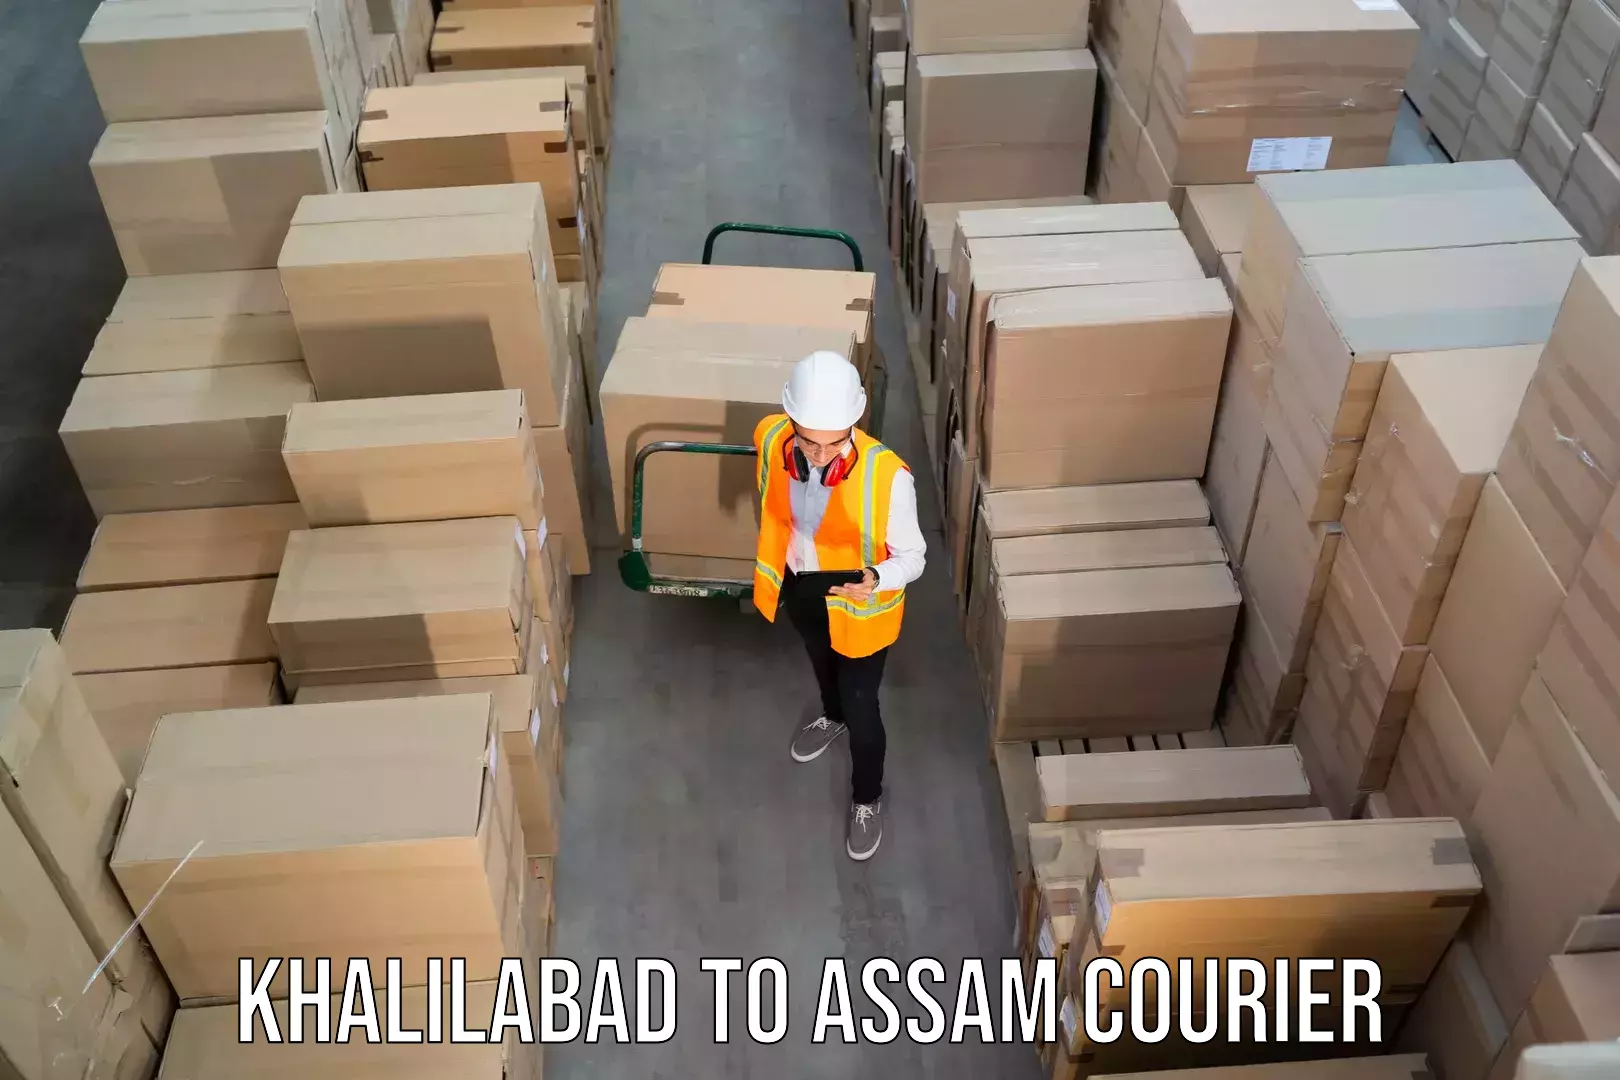 Courier service partnerships Khalilabad to Gohpur